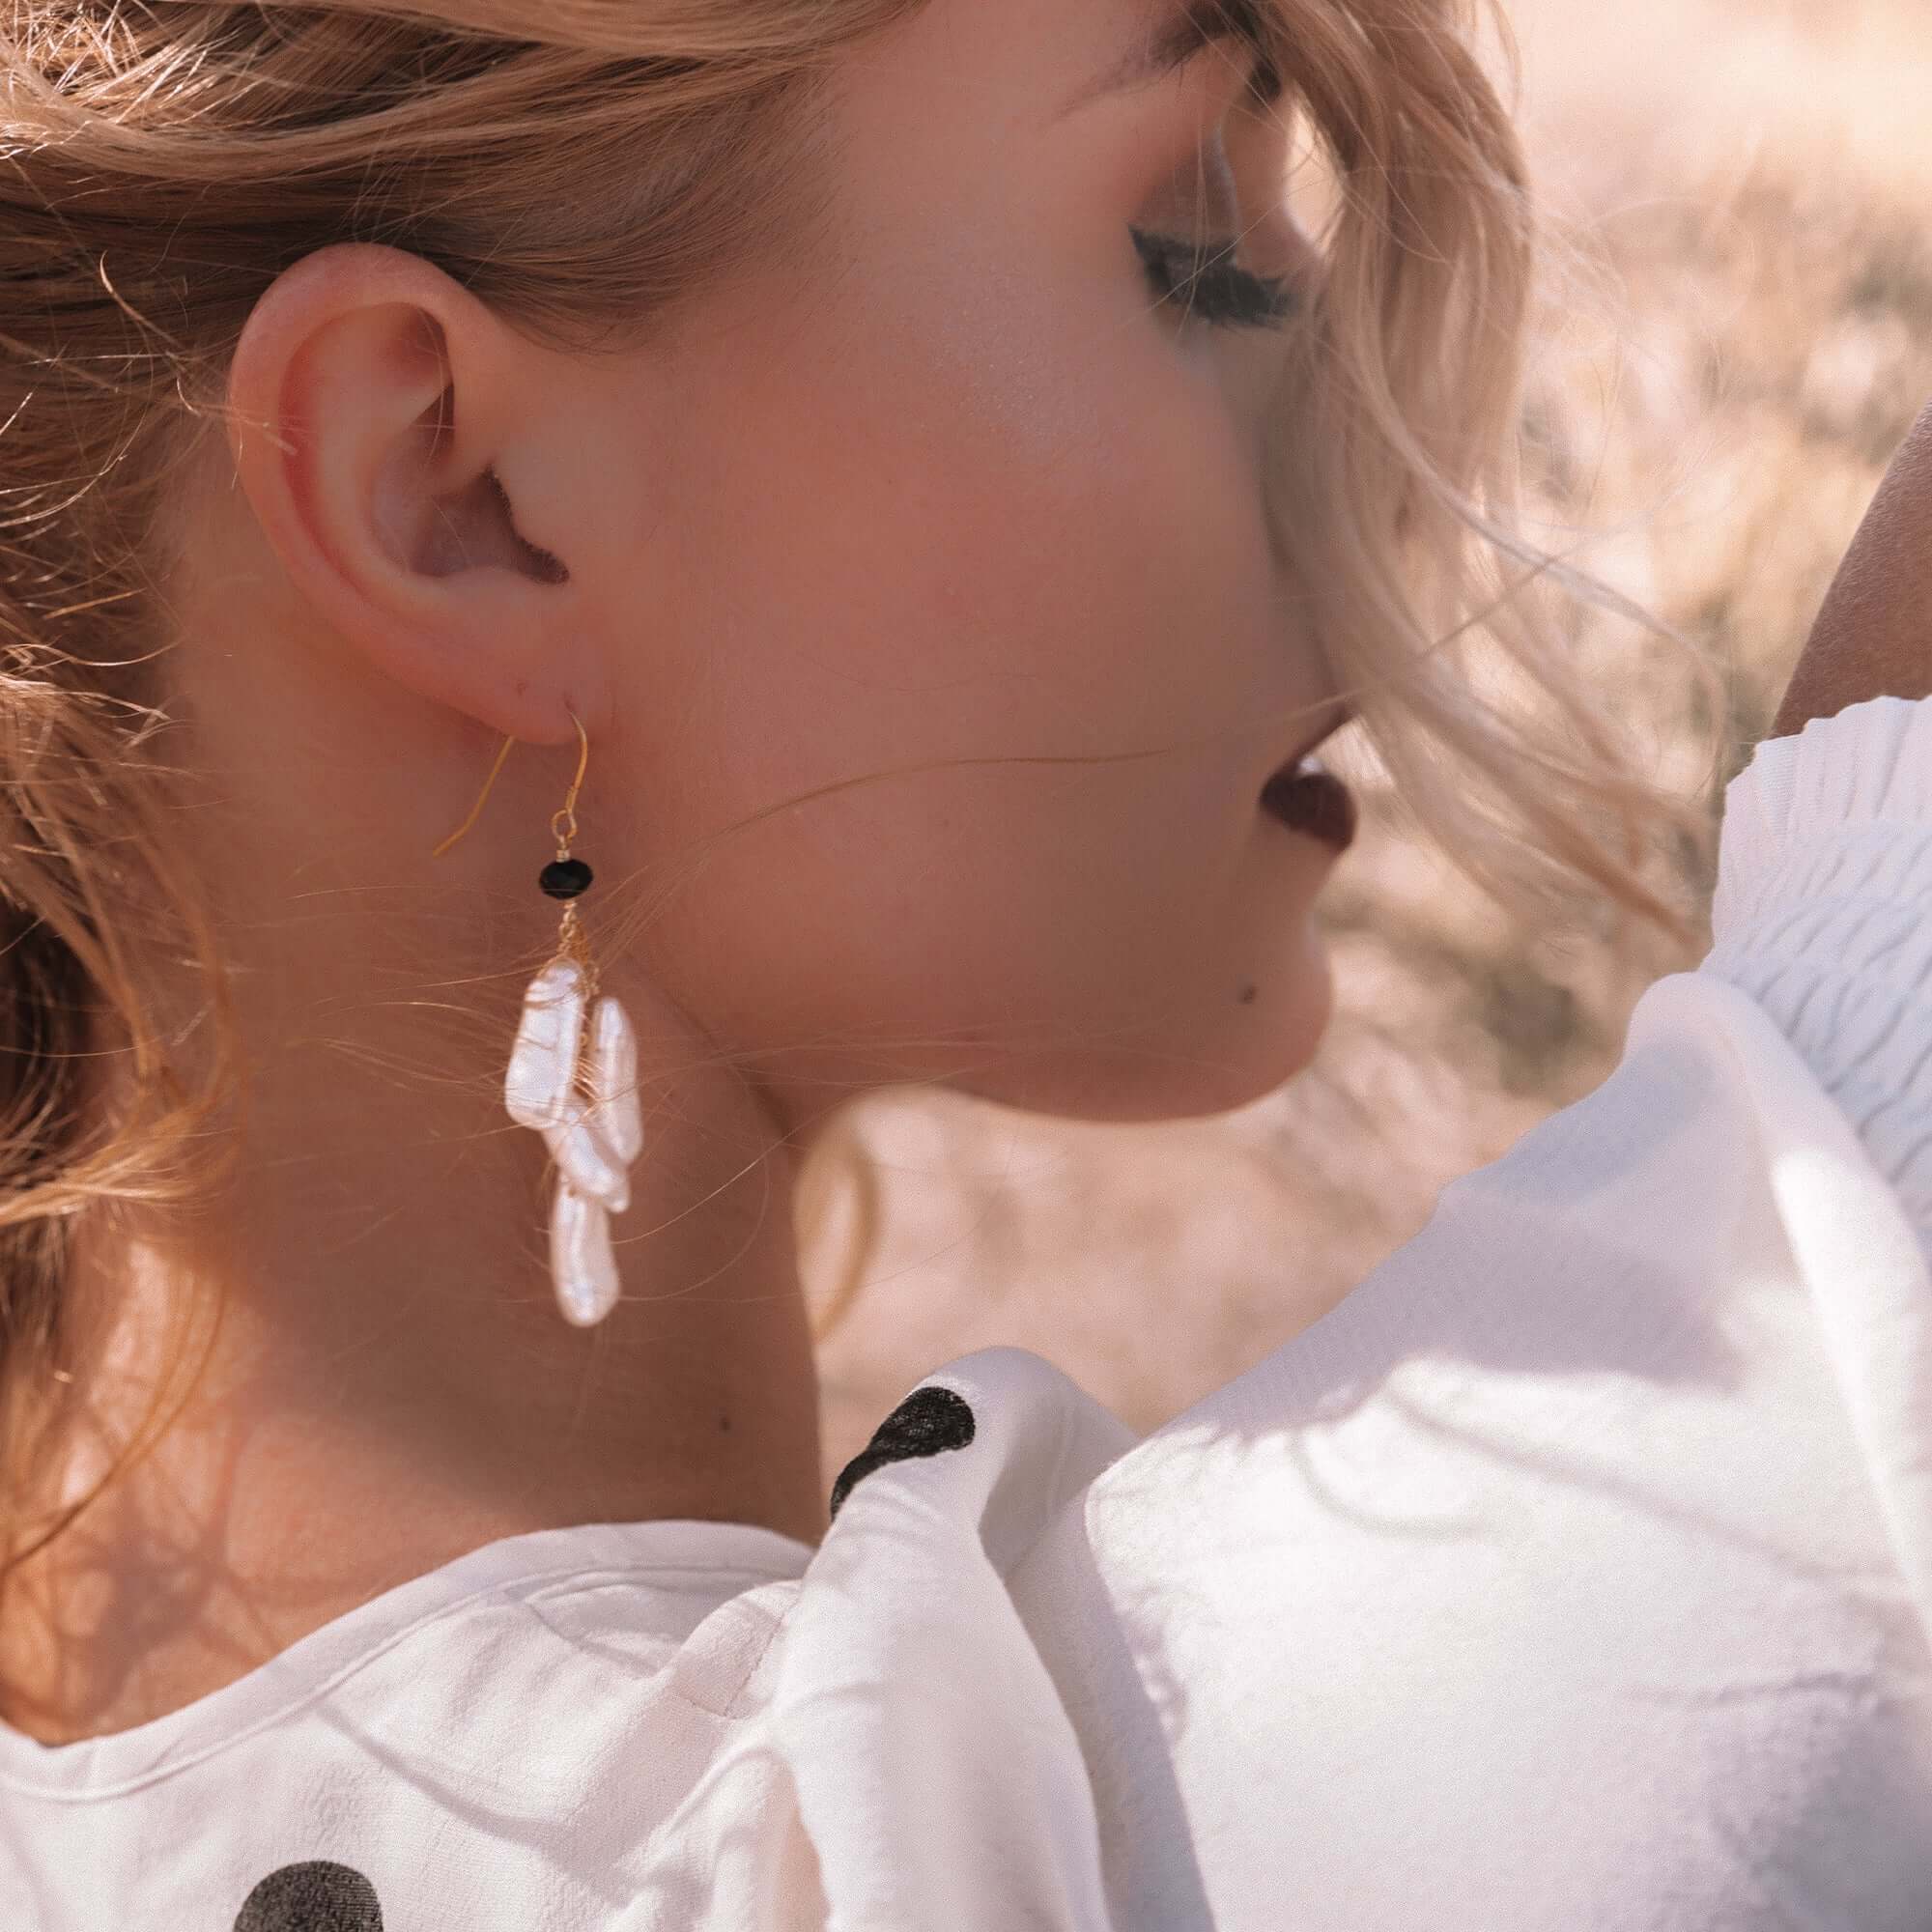 White Stick Pearl Earrings